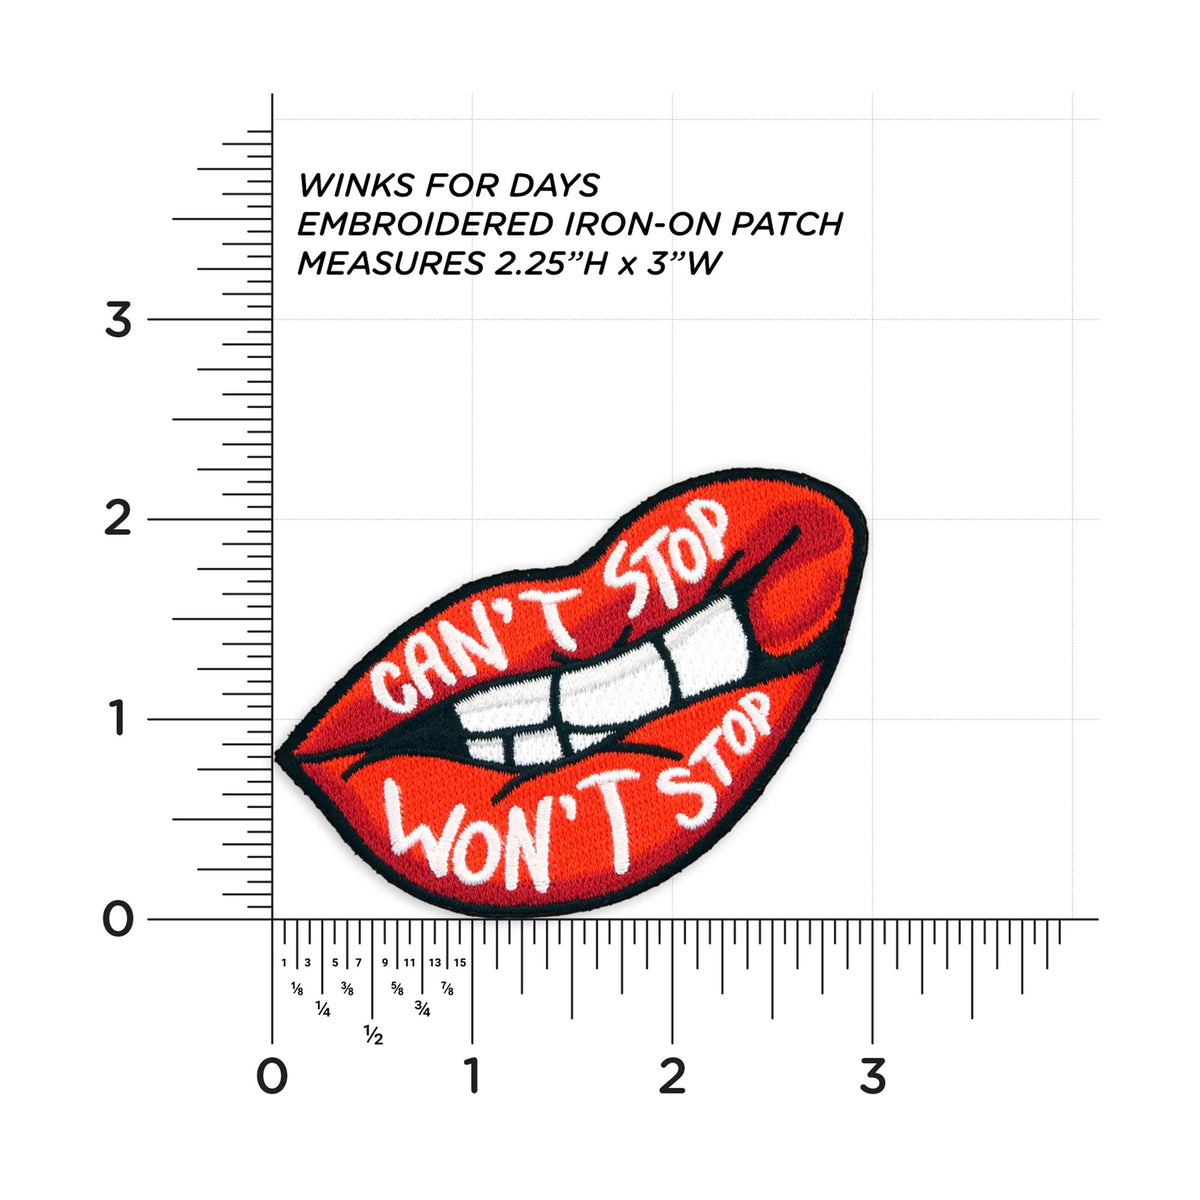 Can't Stop Won't Stop Lips patch measurements